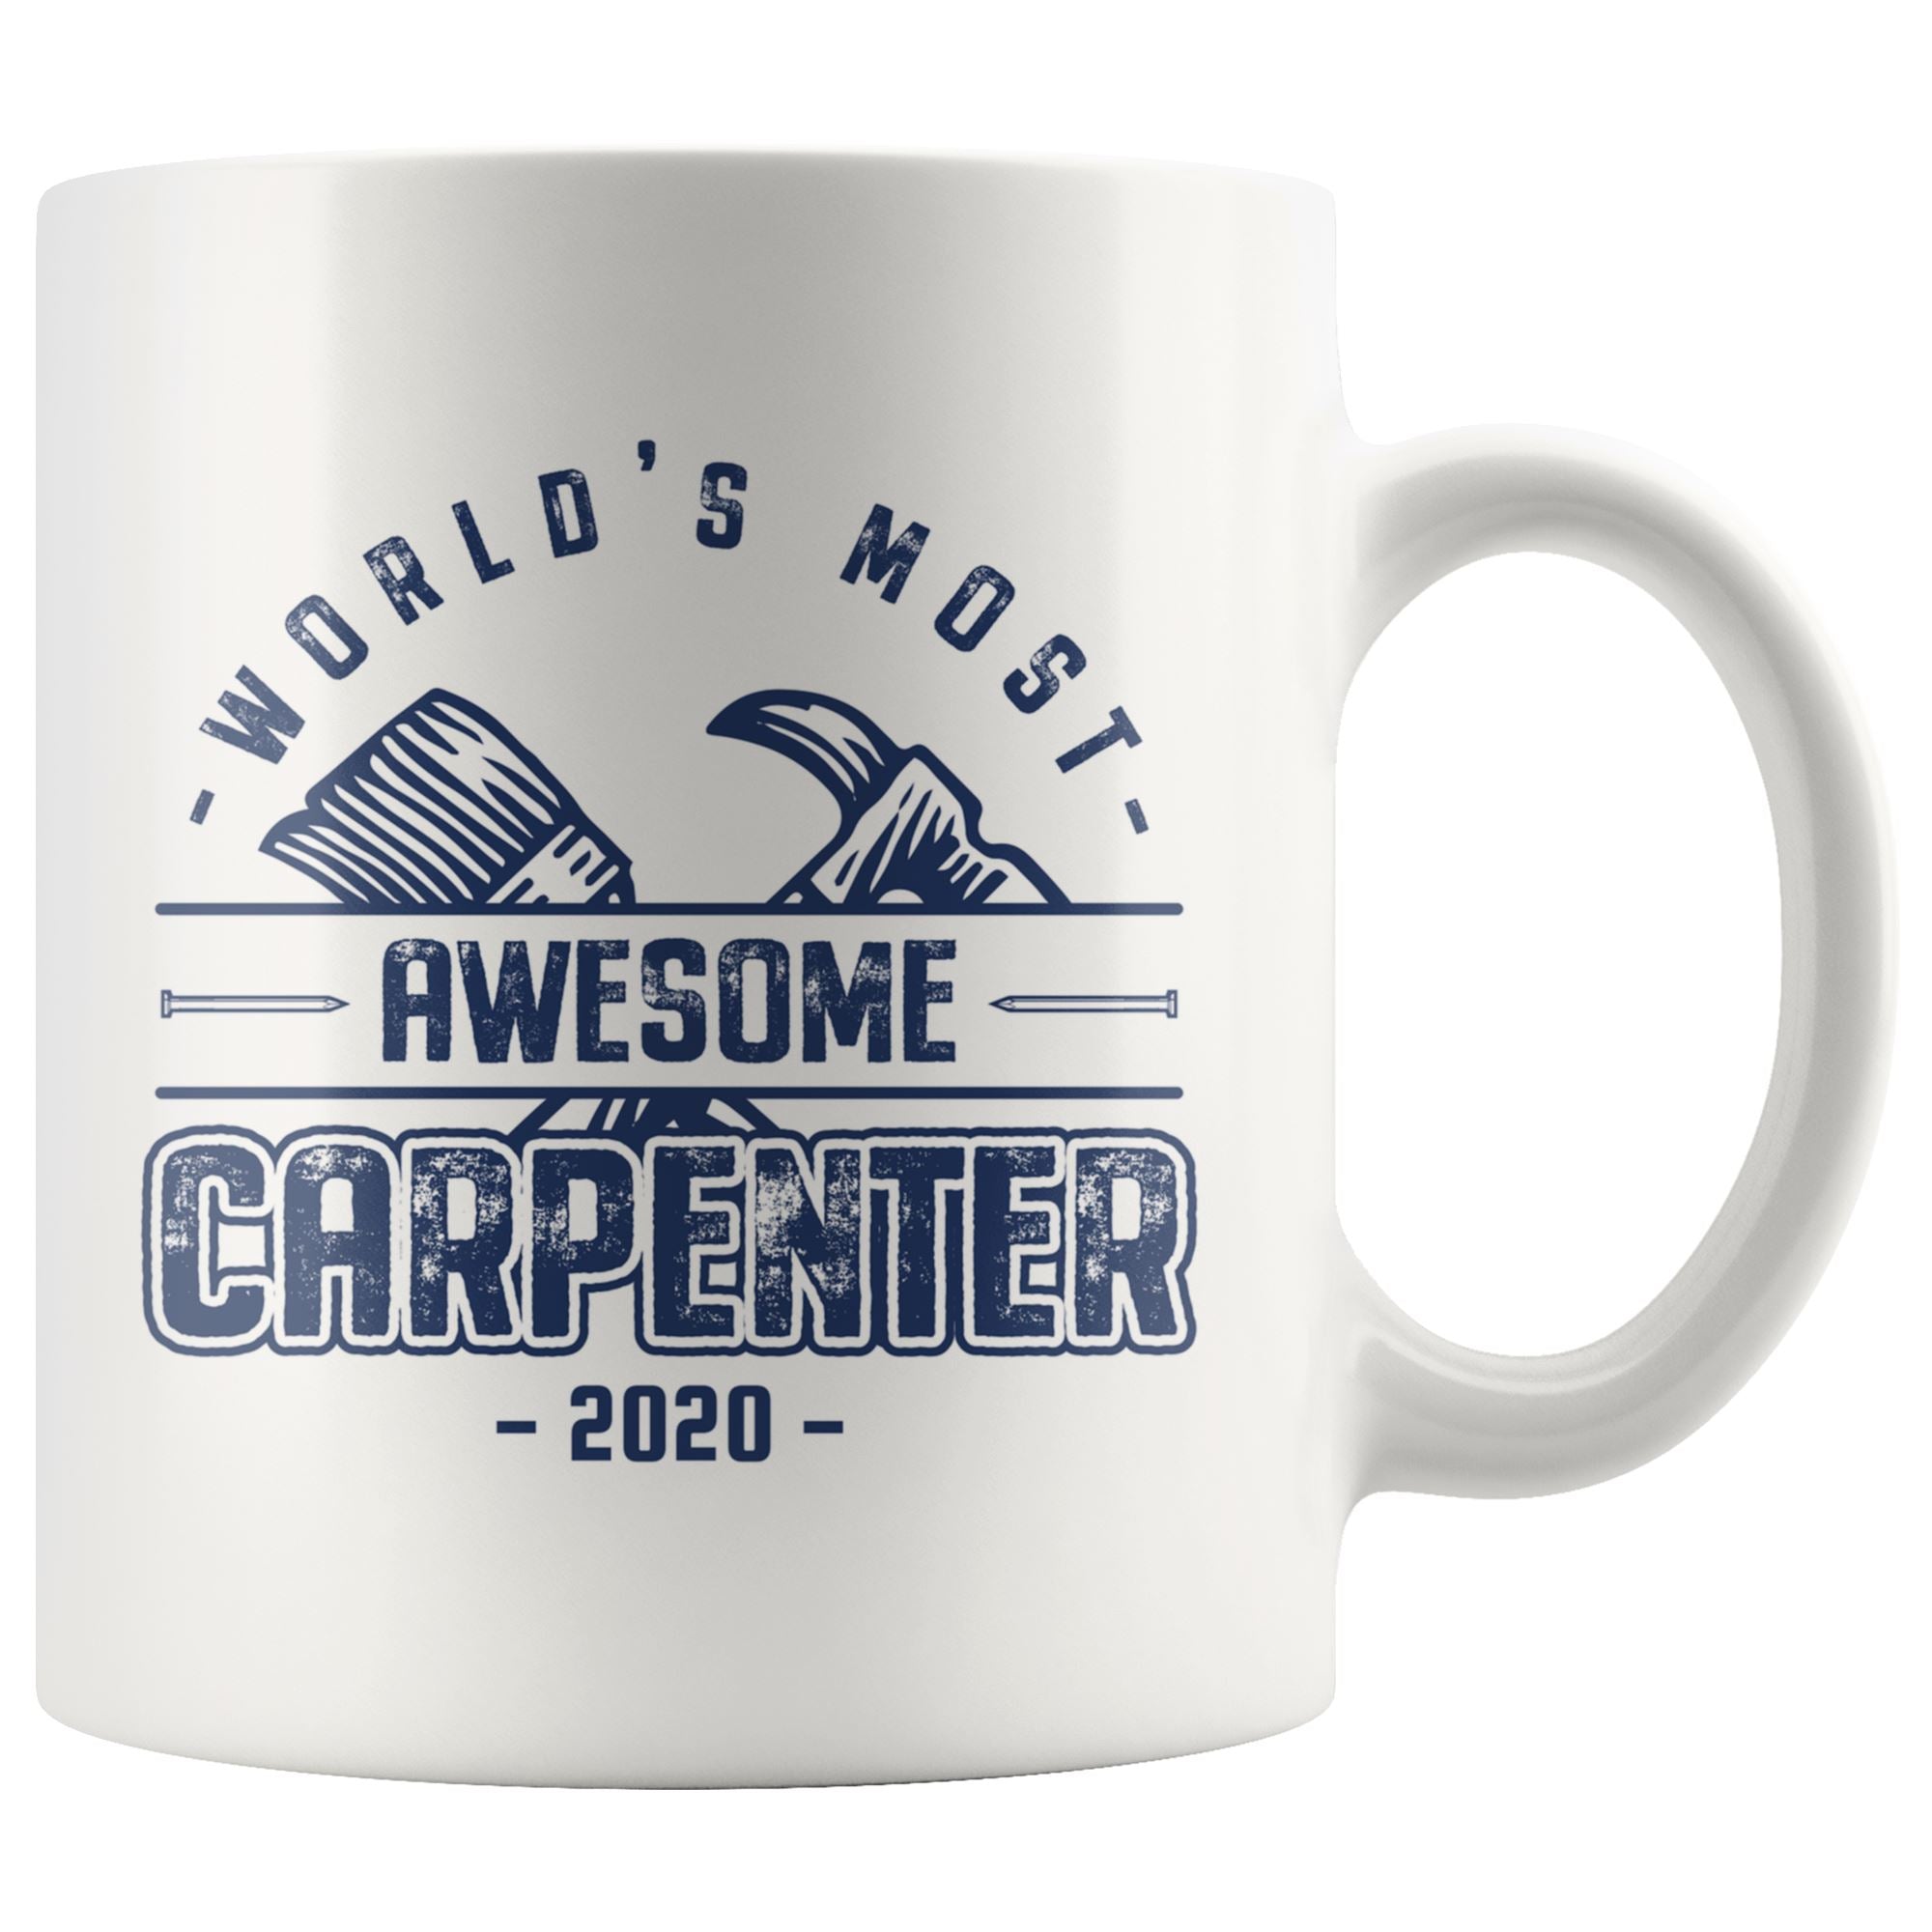 Carpenter Drinkware teelaunch 11oz Mug 